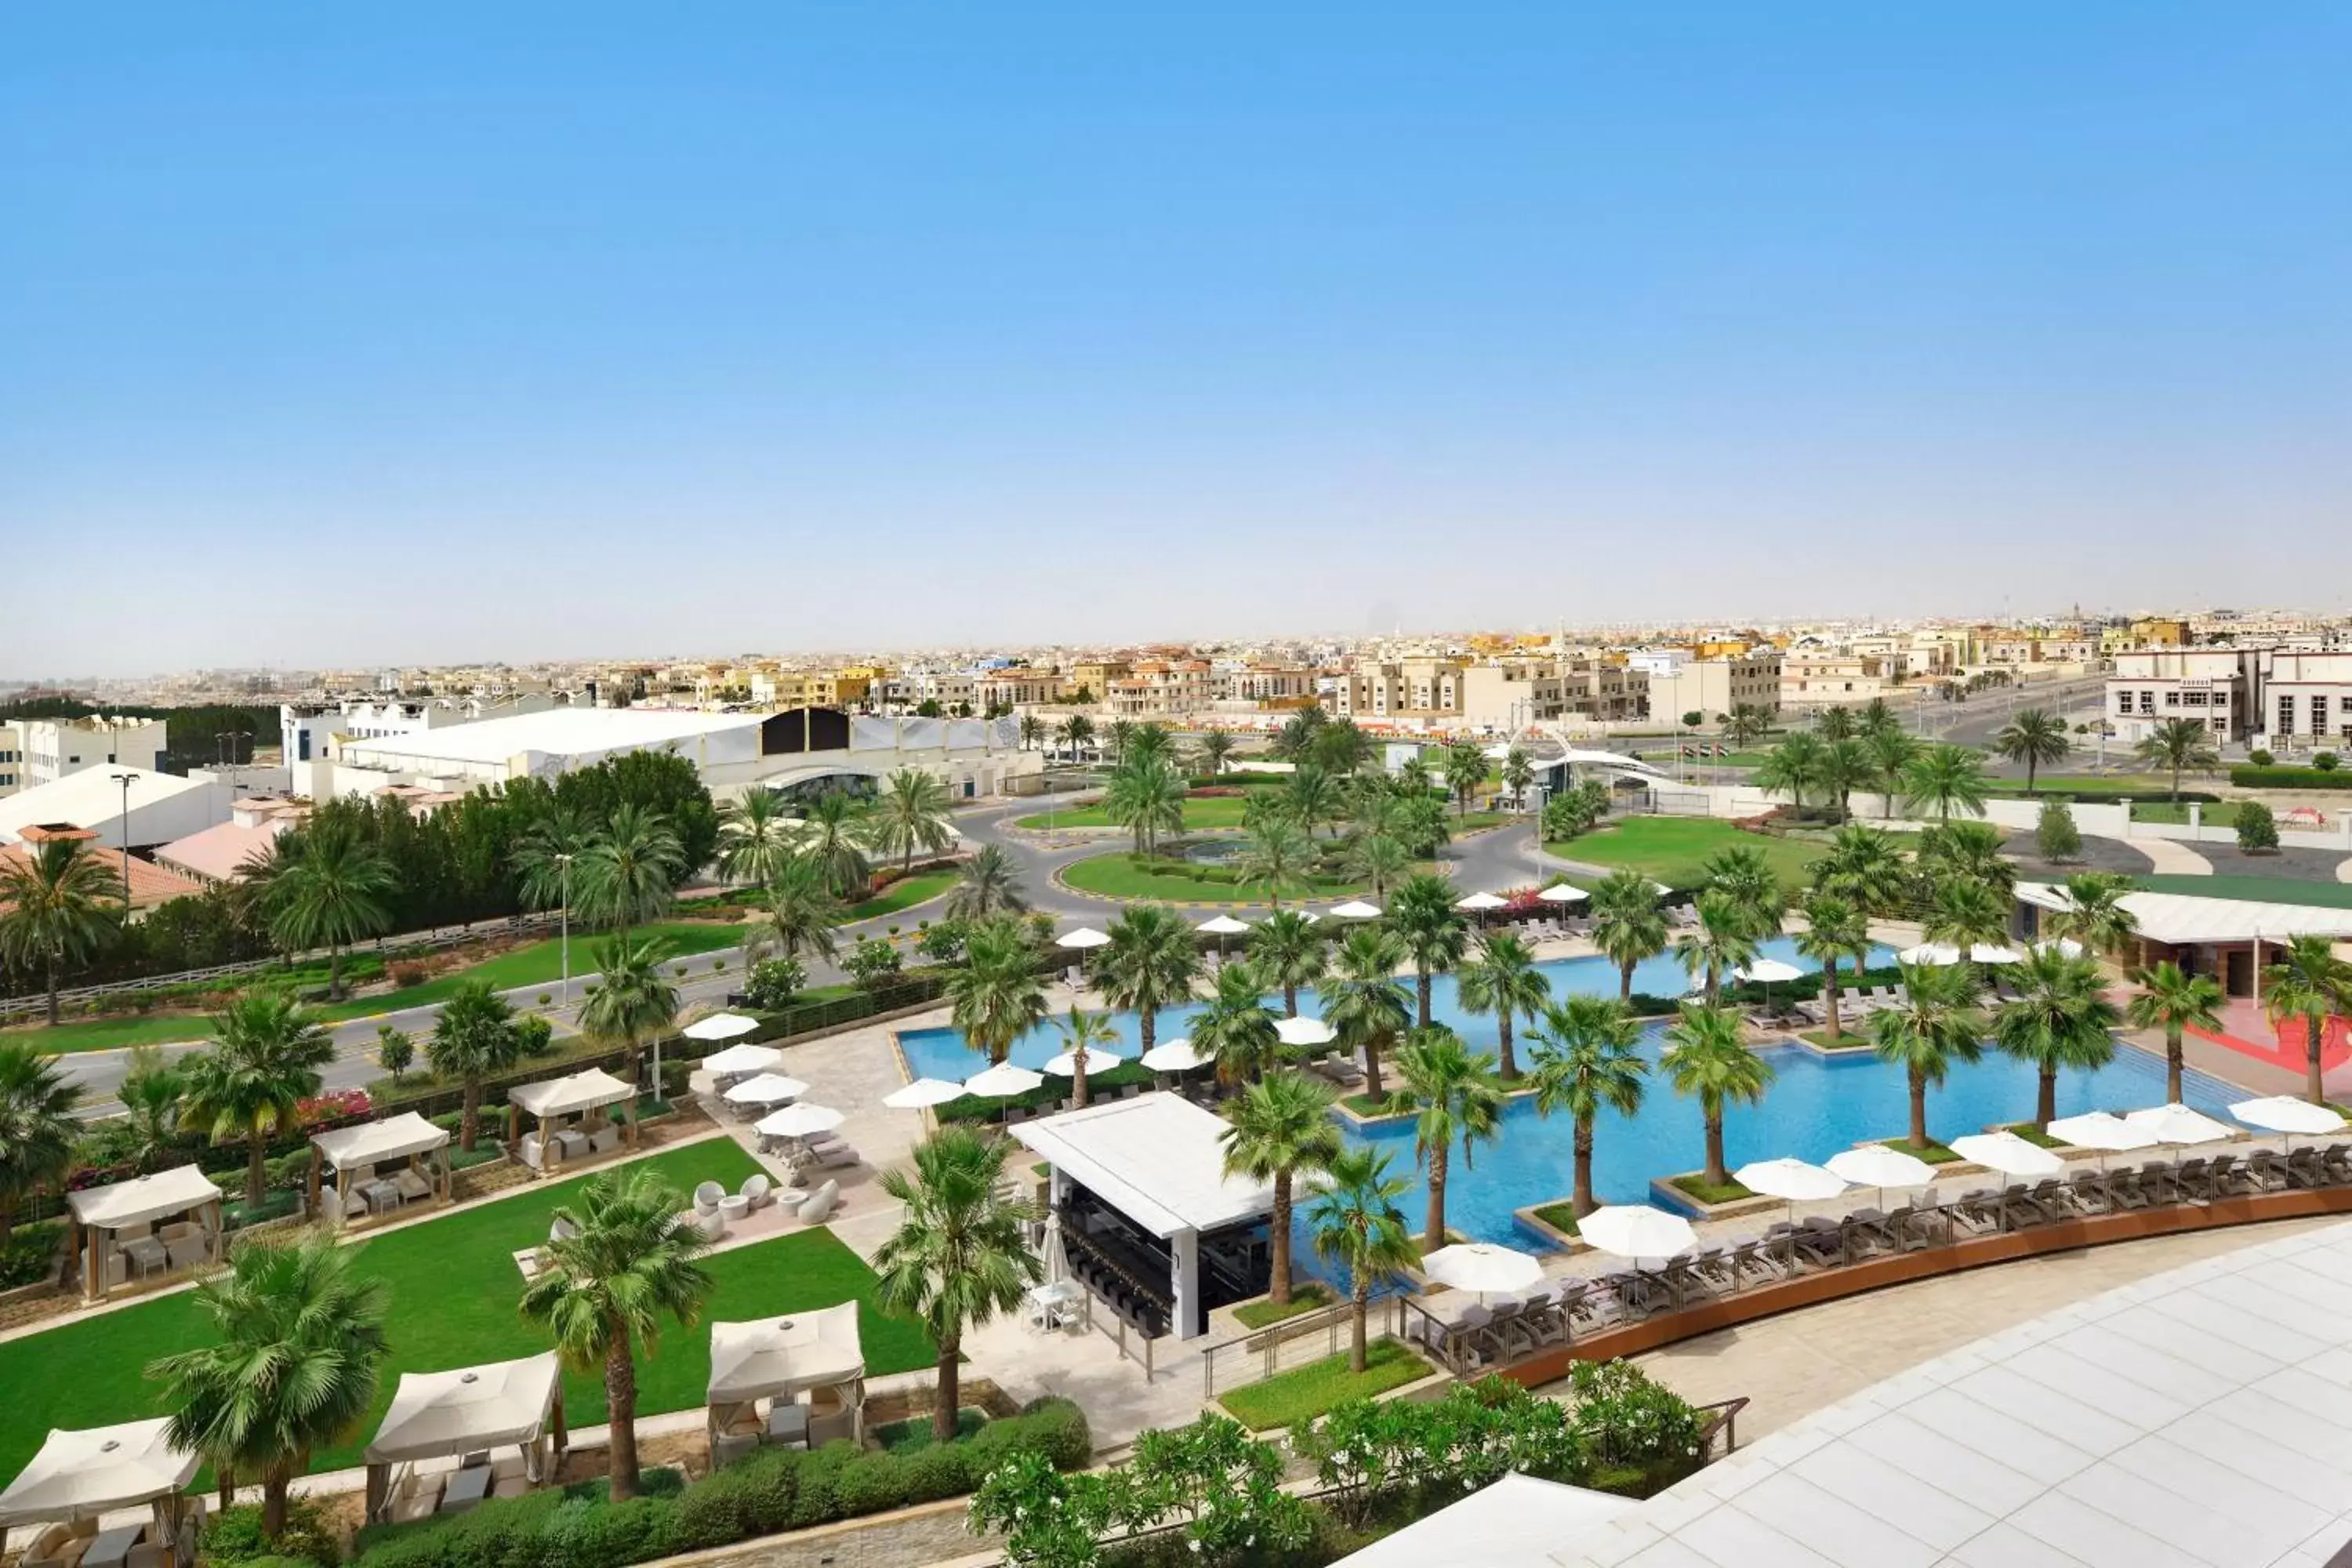 Swimming pool in Marriott Hotel Al Forsan, Abu Dhabi